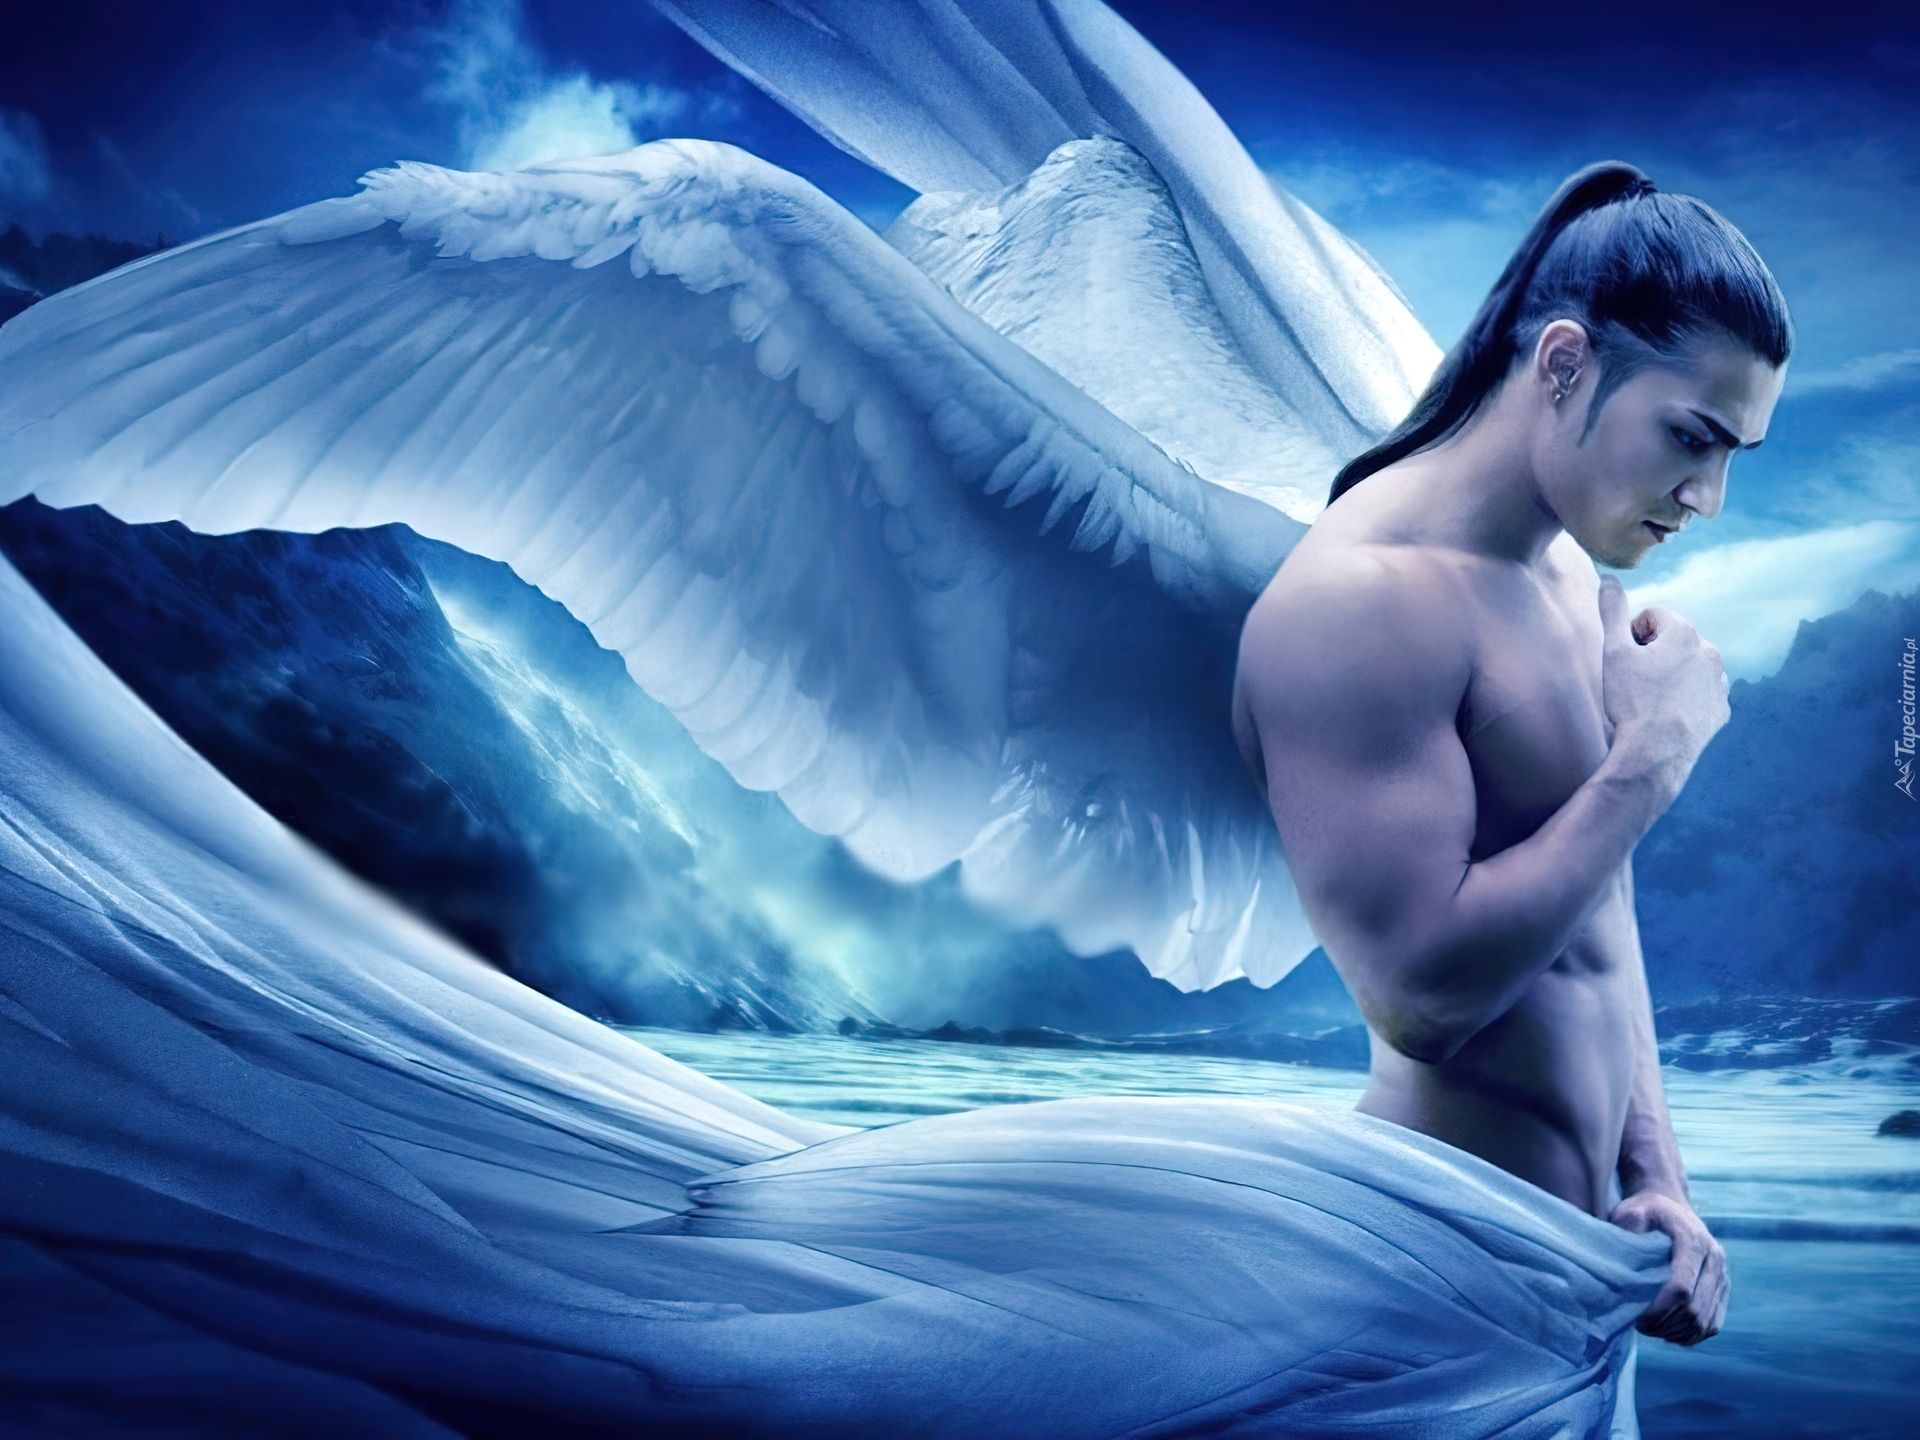 Angels men s. Ангел мужчина. Мужчина с крыльями ангела. Красивый ангел. Парень с крыльями ангела.